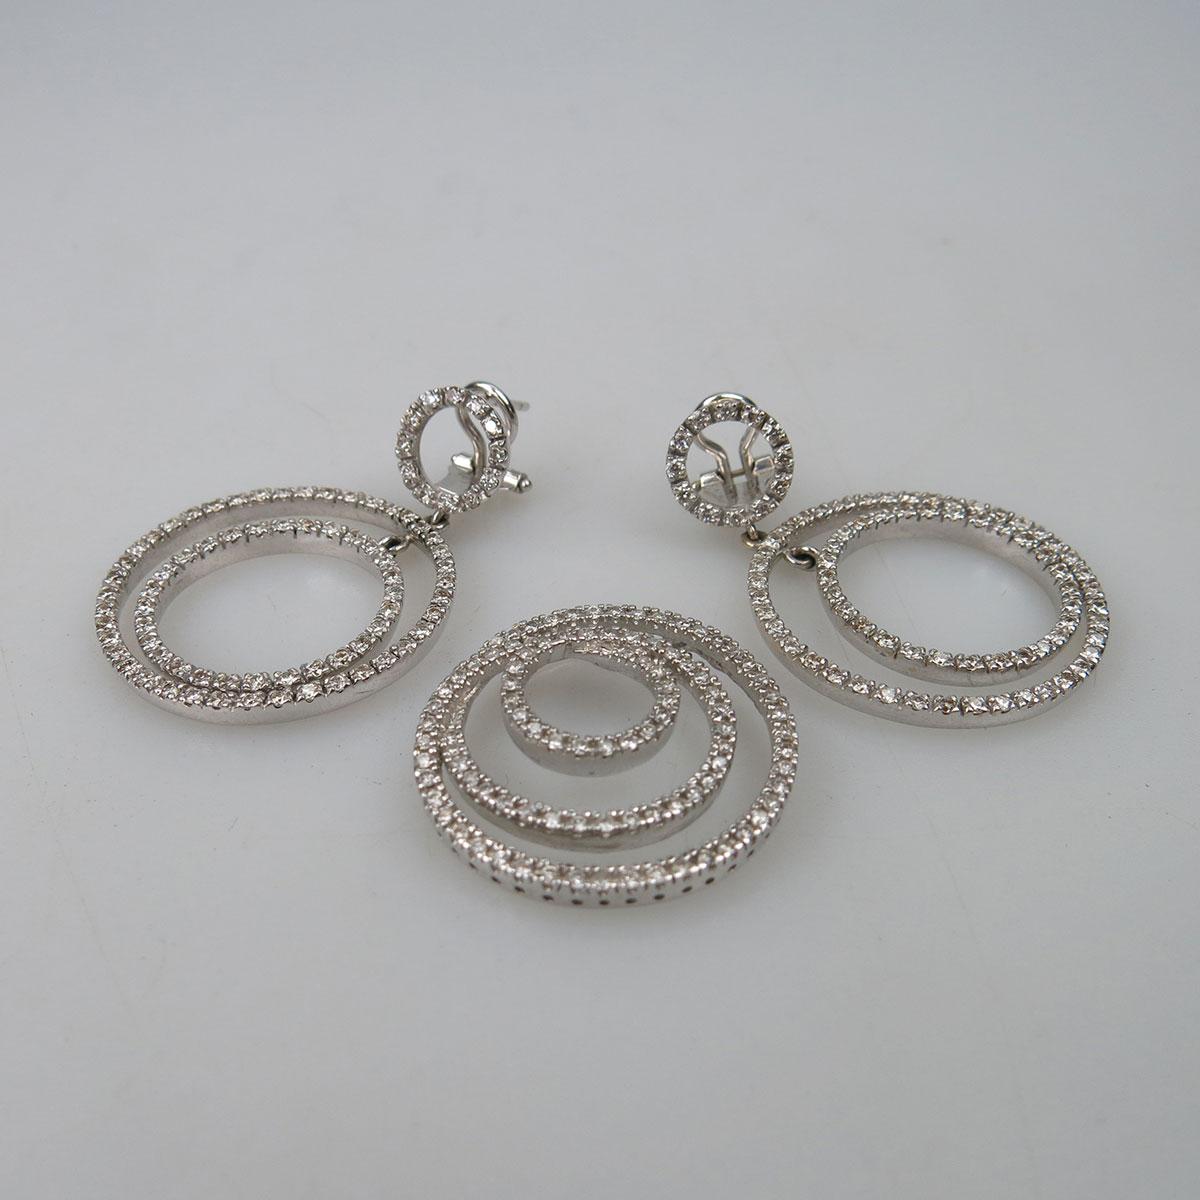 Pair Of Italian 18k White Gold Drop Earrings